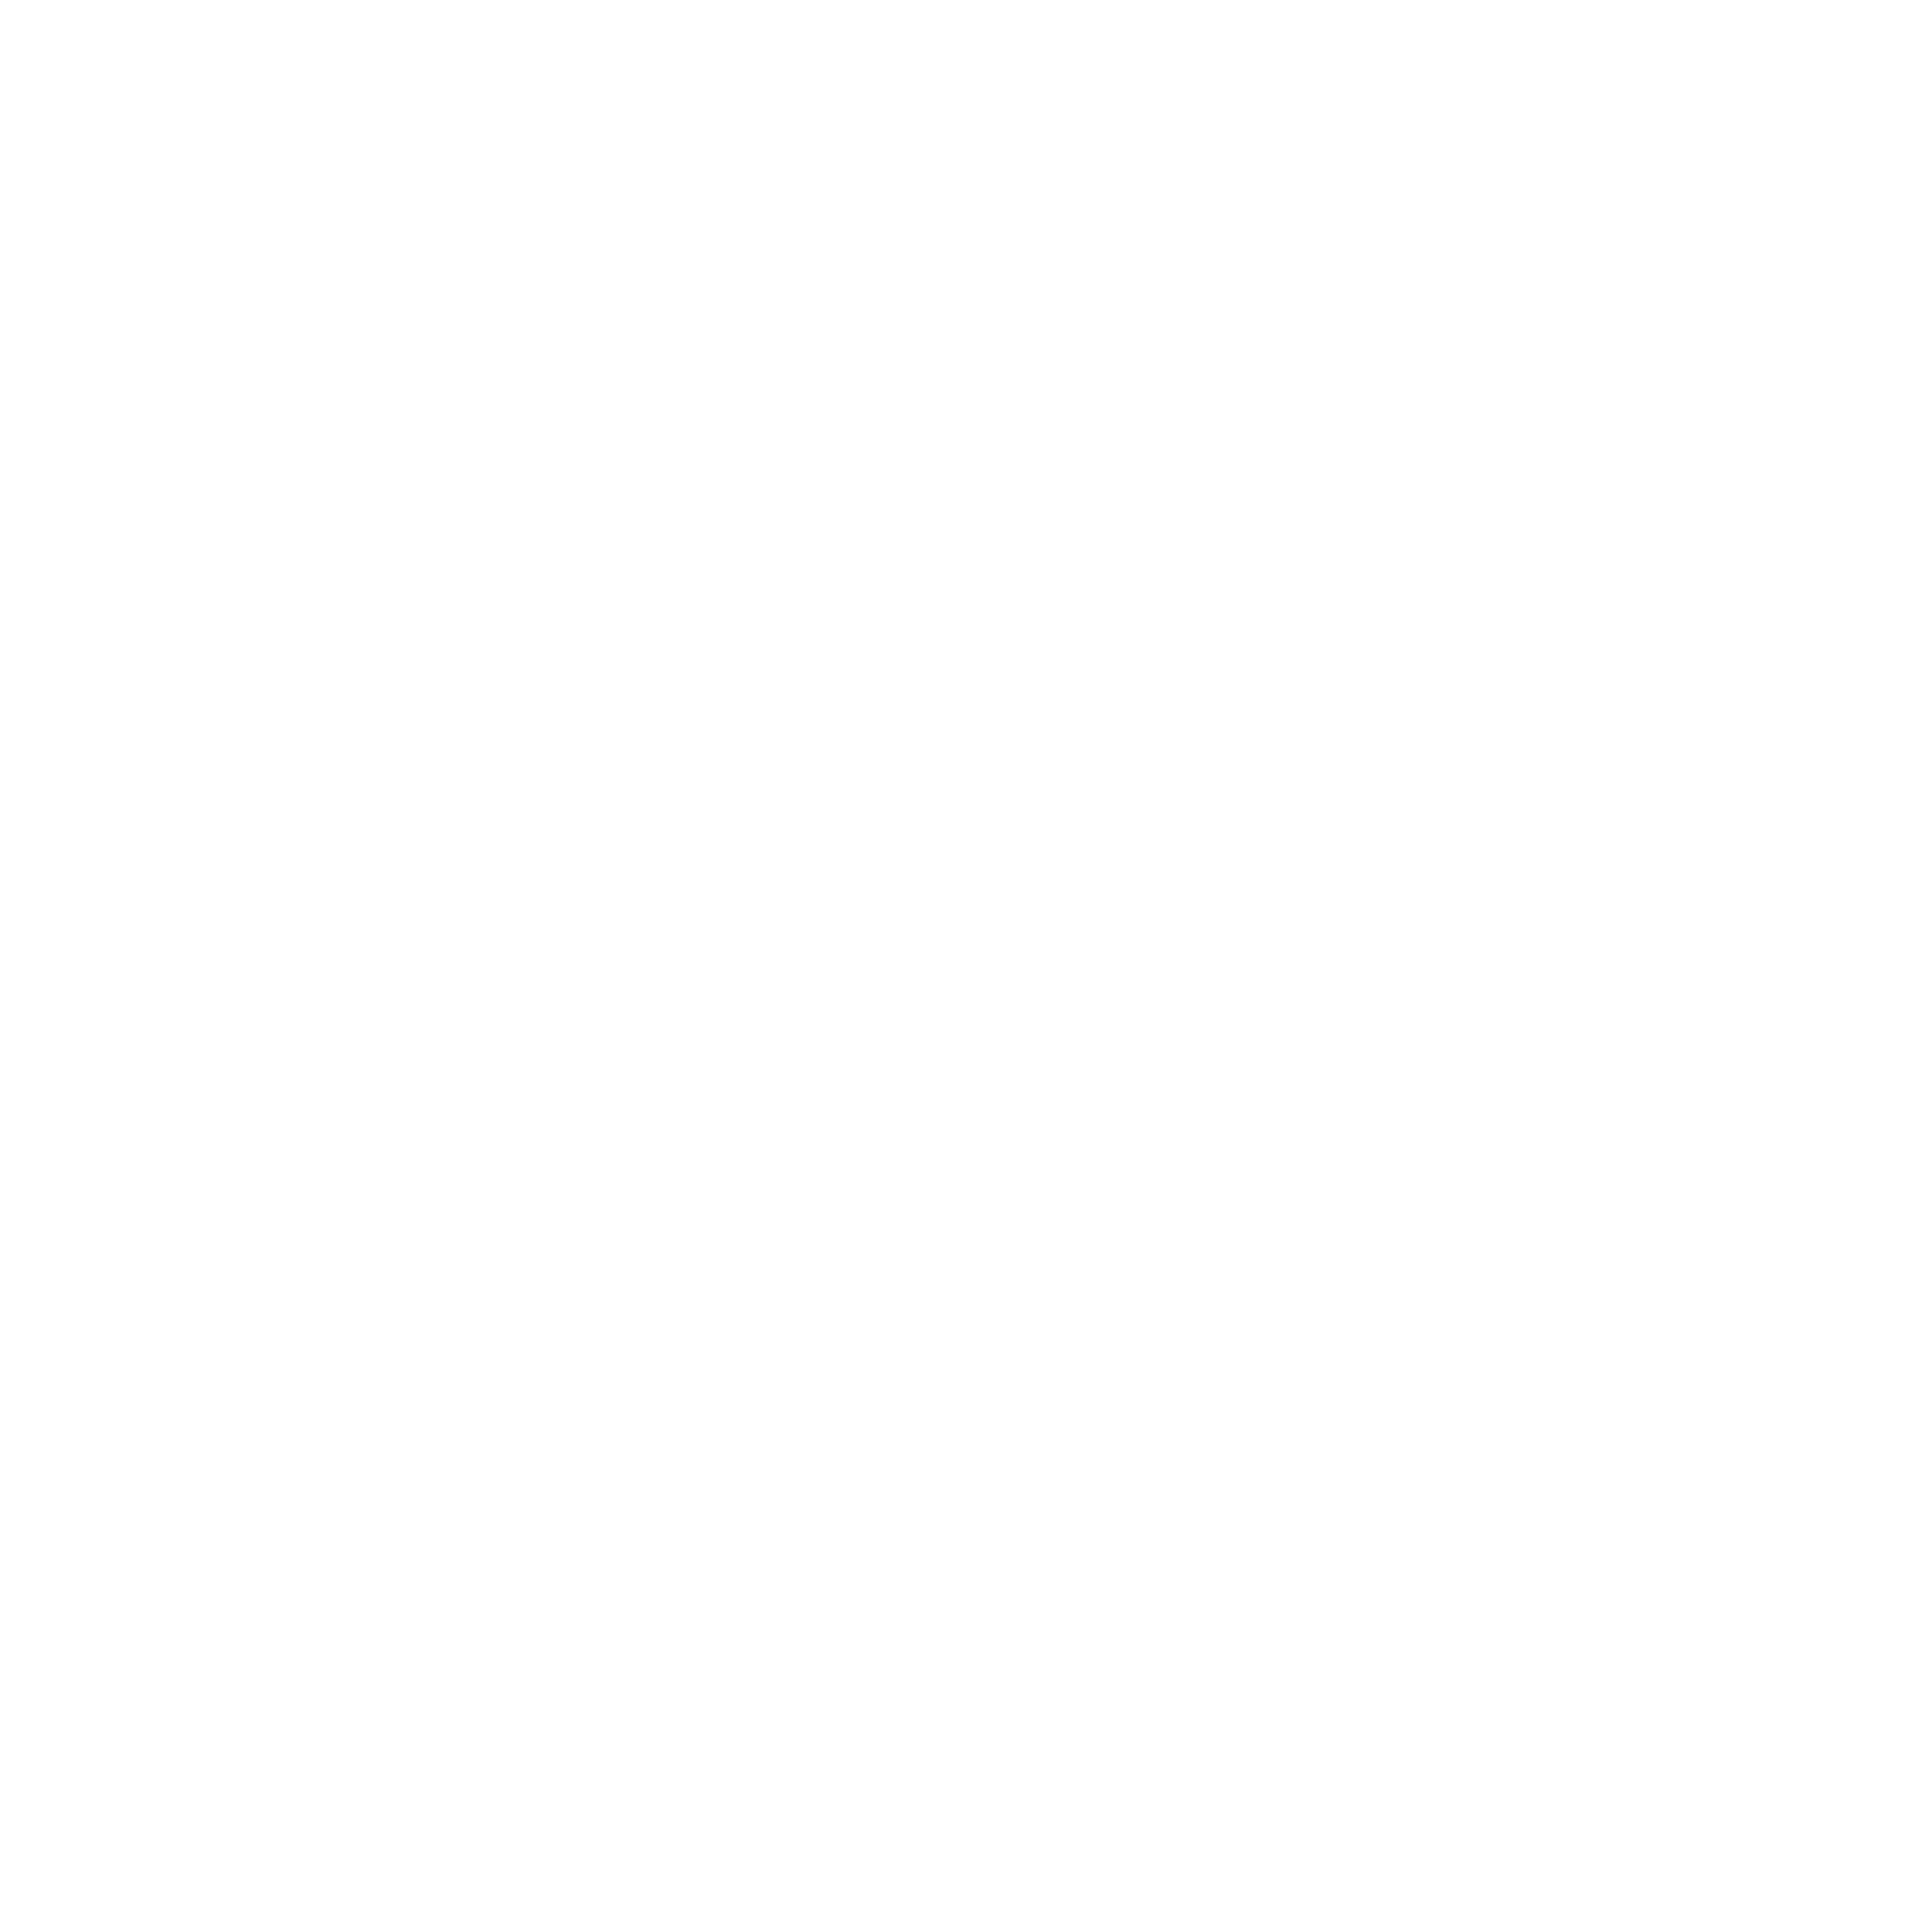 JICA Logo - JICA Logo PNG Transparent & SVG Vector - Freebie Supply